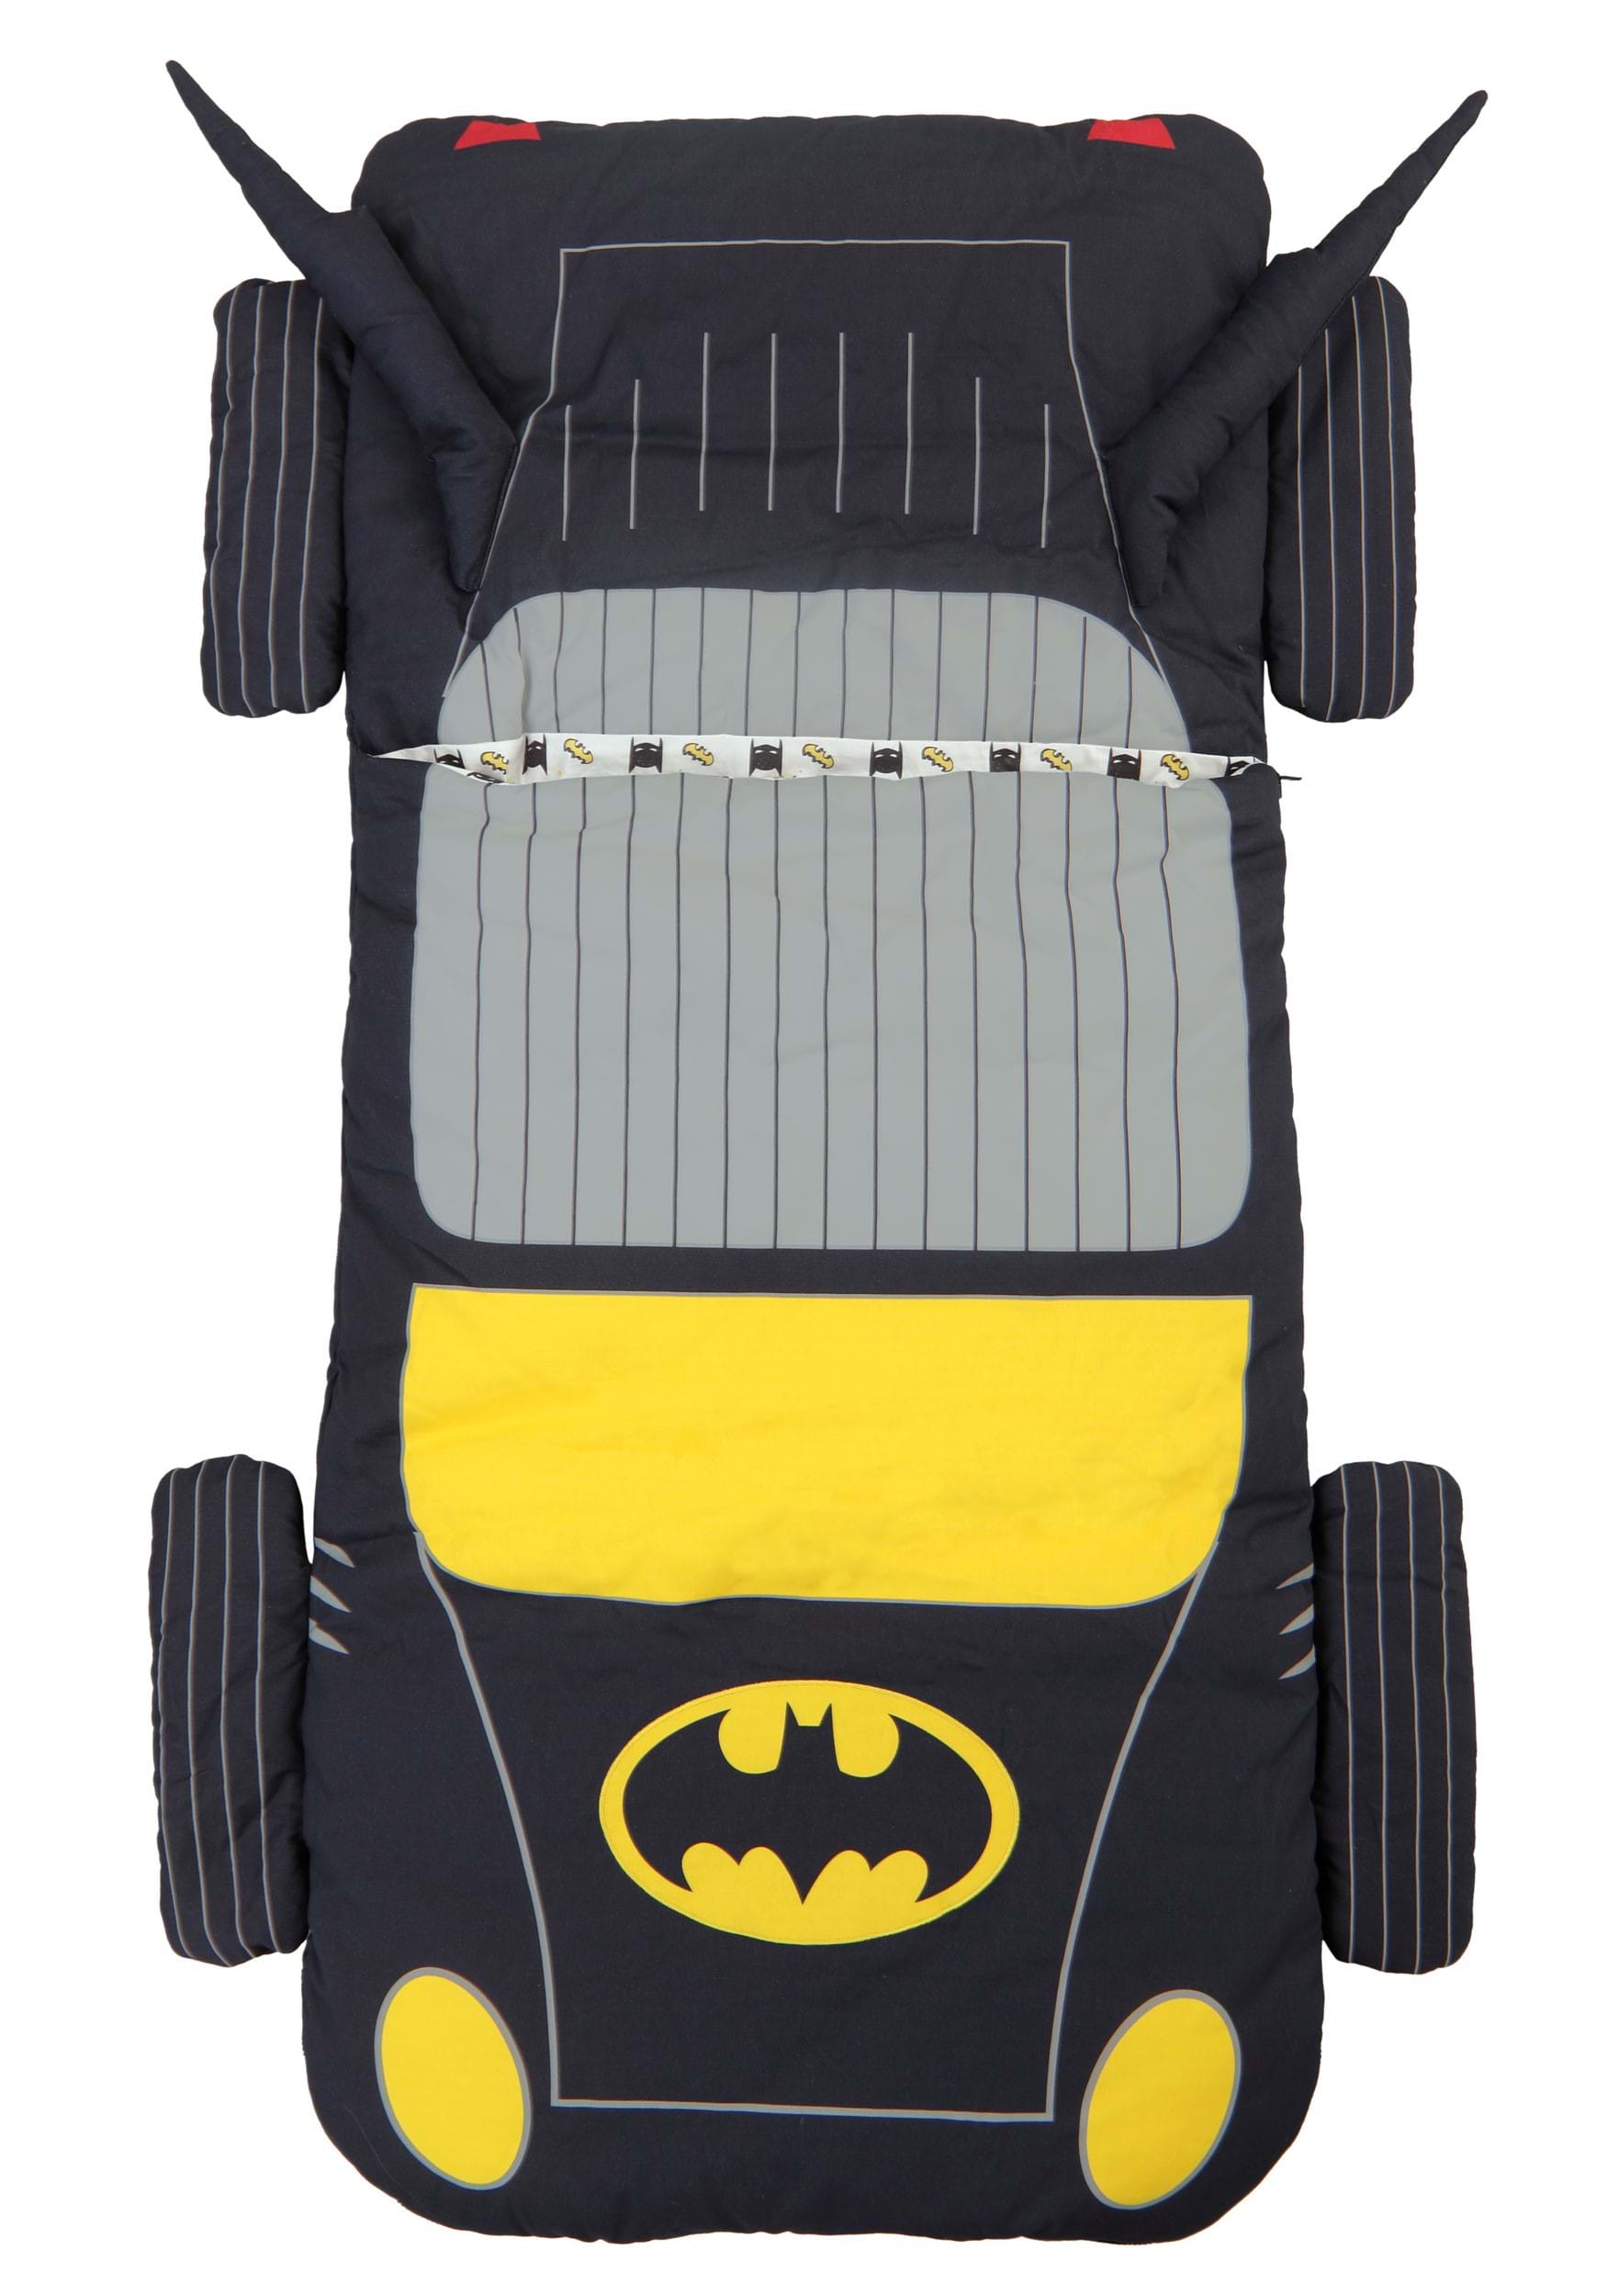 Batman Batmobile Sleeping Bag